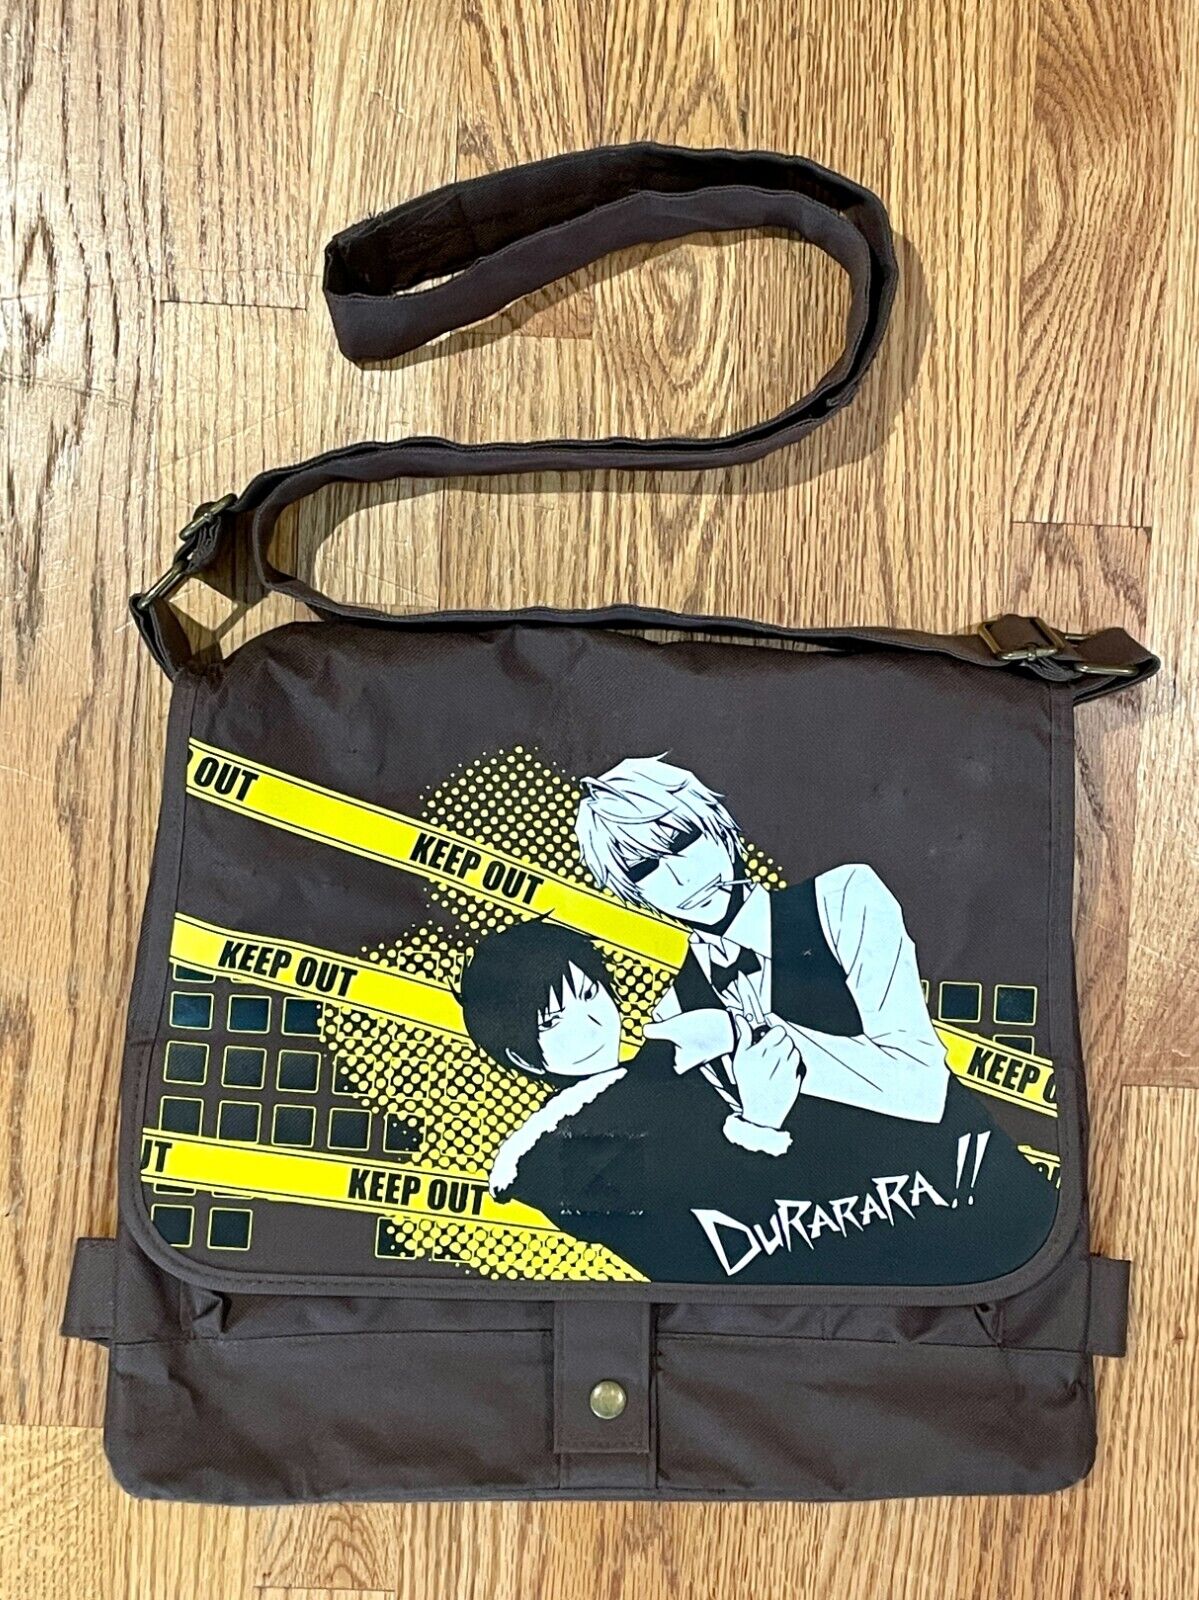 DuRaRaRa Anime Cosplay Brown Messenger Shoulder Bag – CLEAN